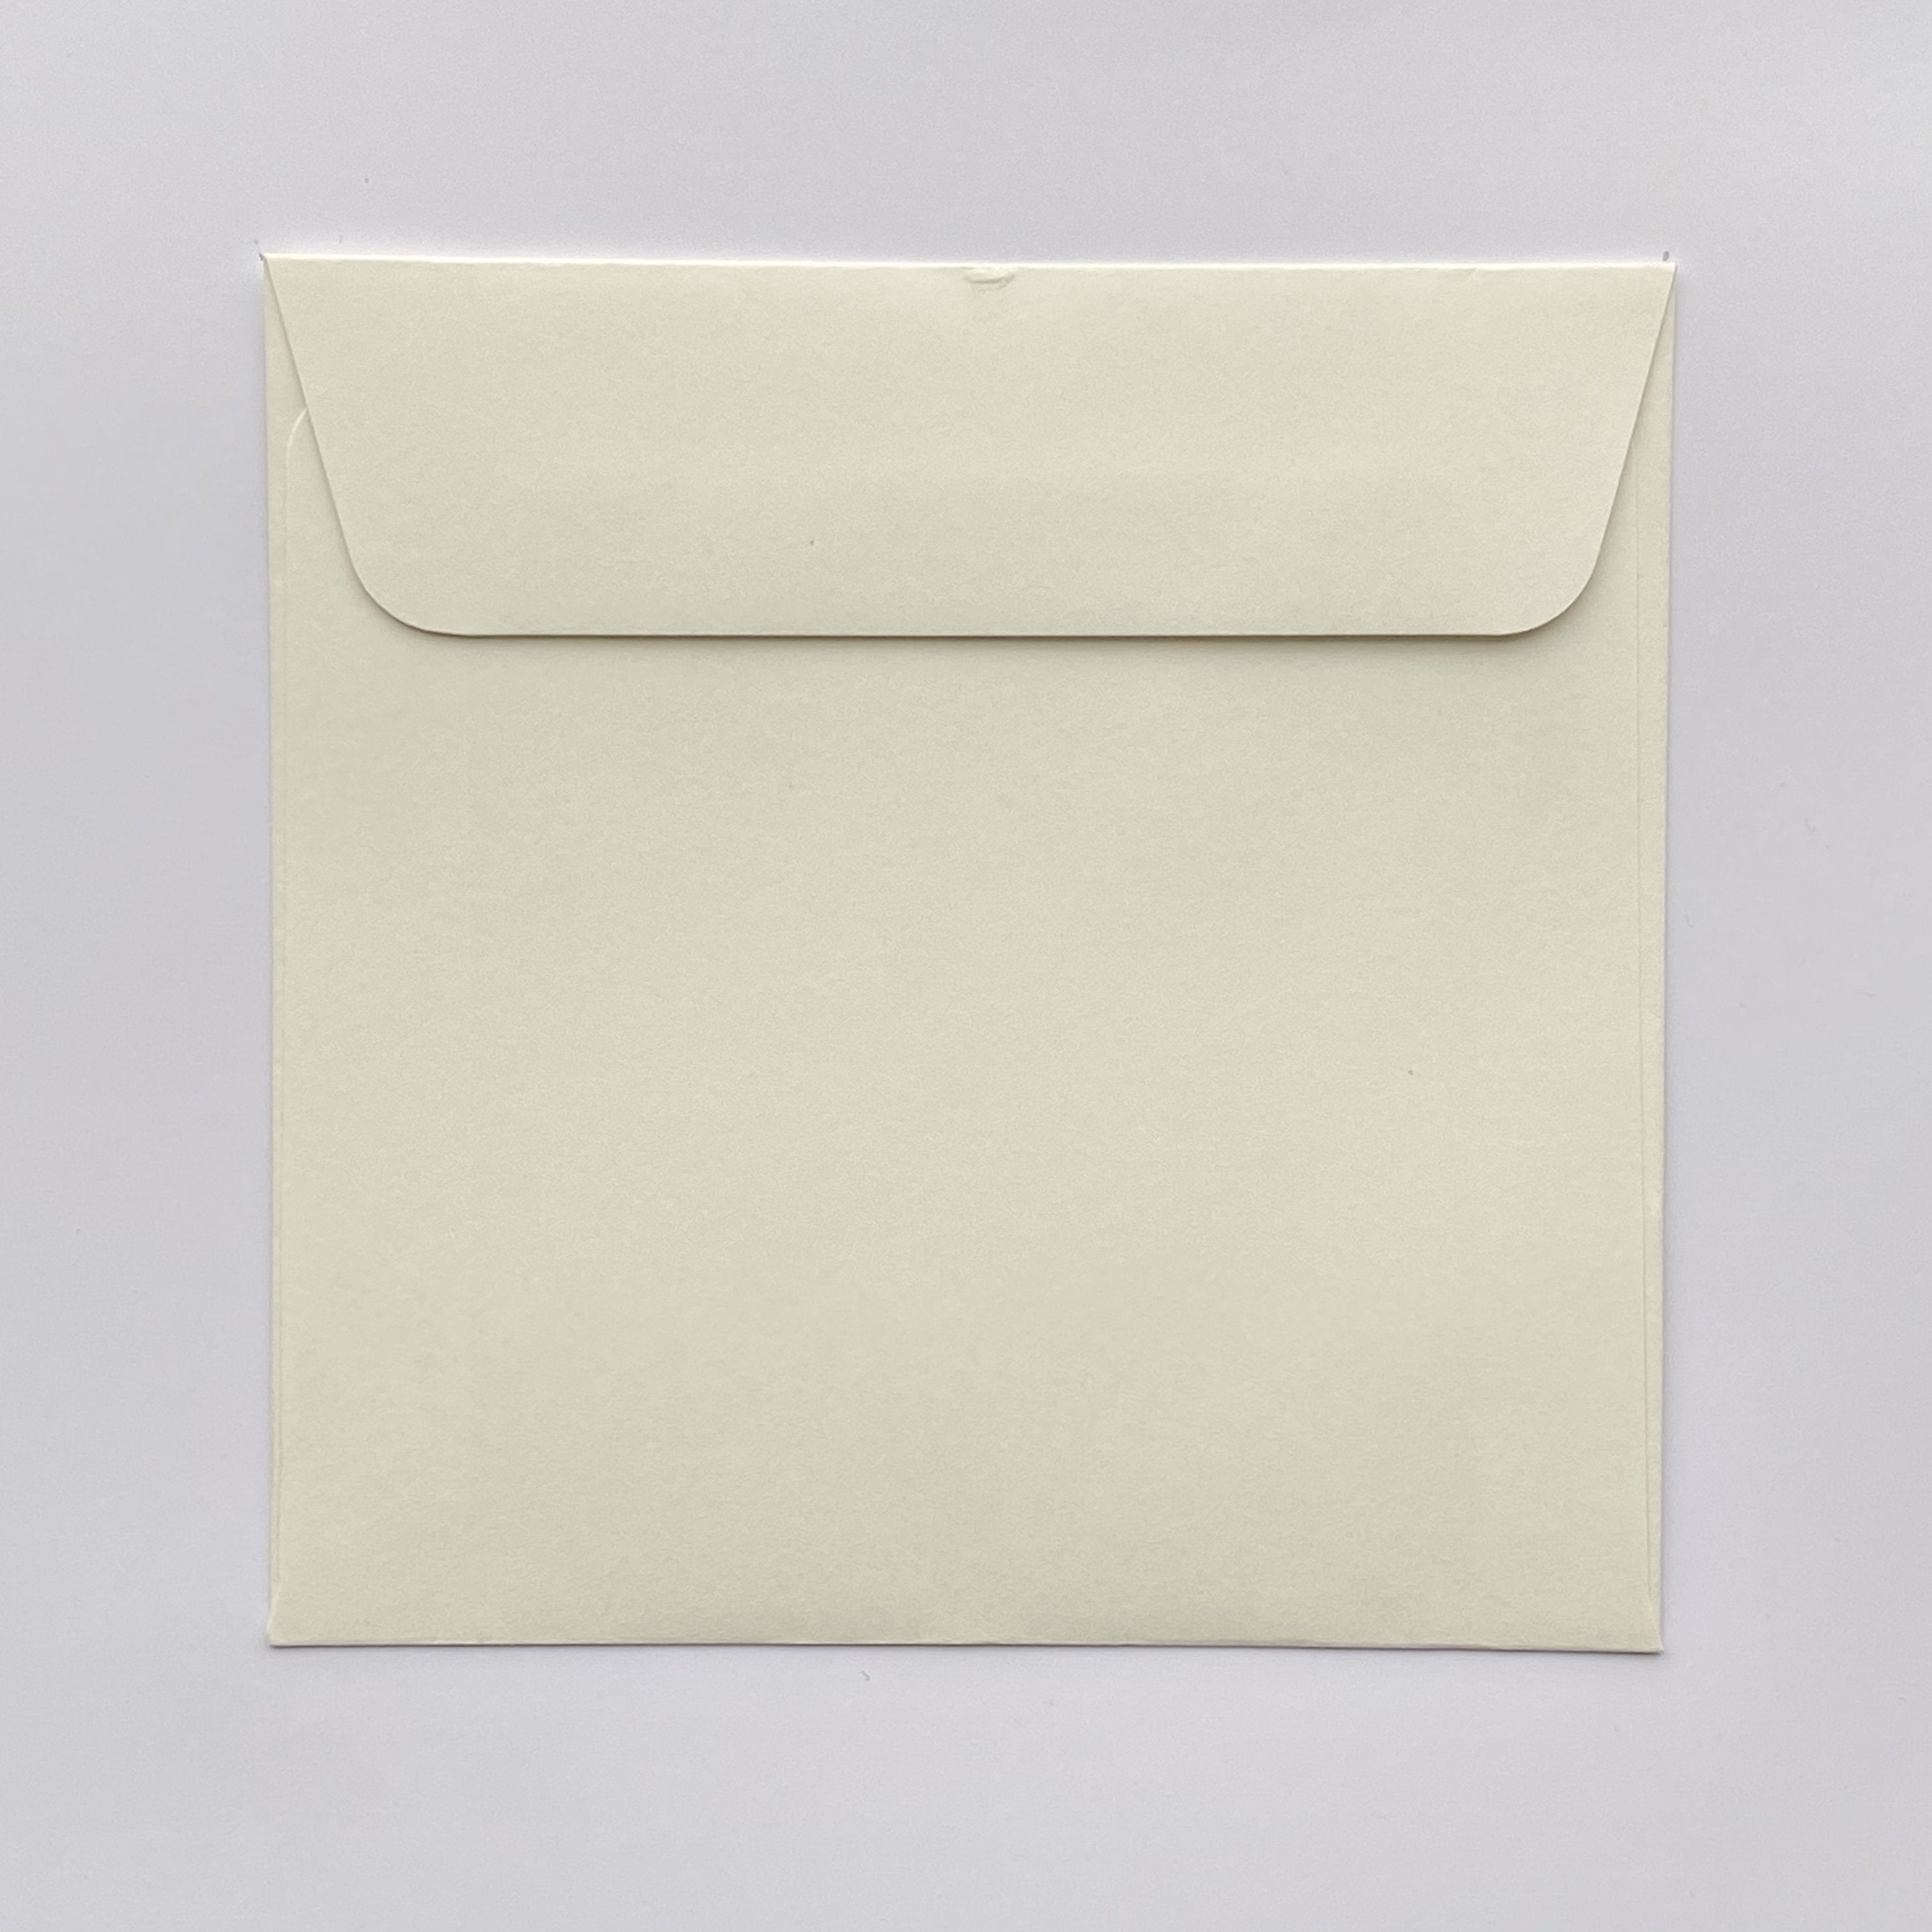 155mm square coloured envelopes